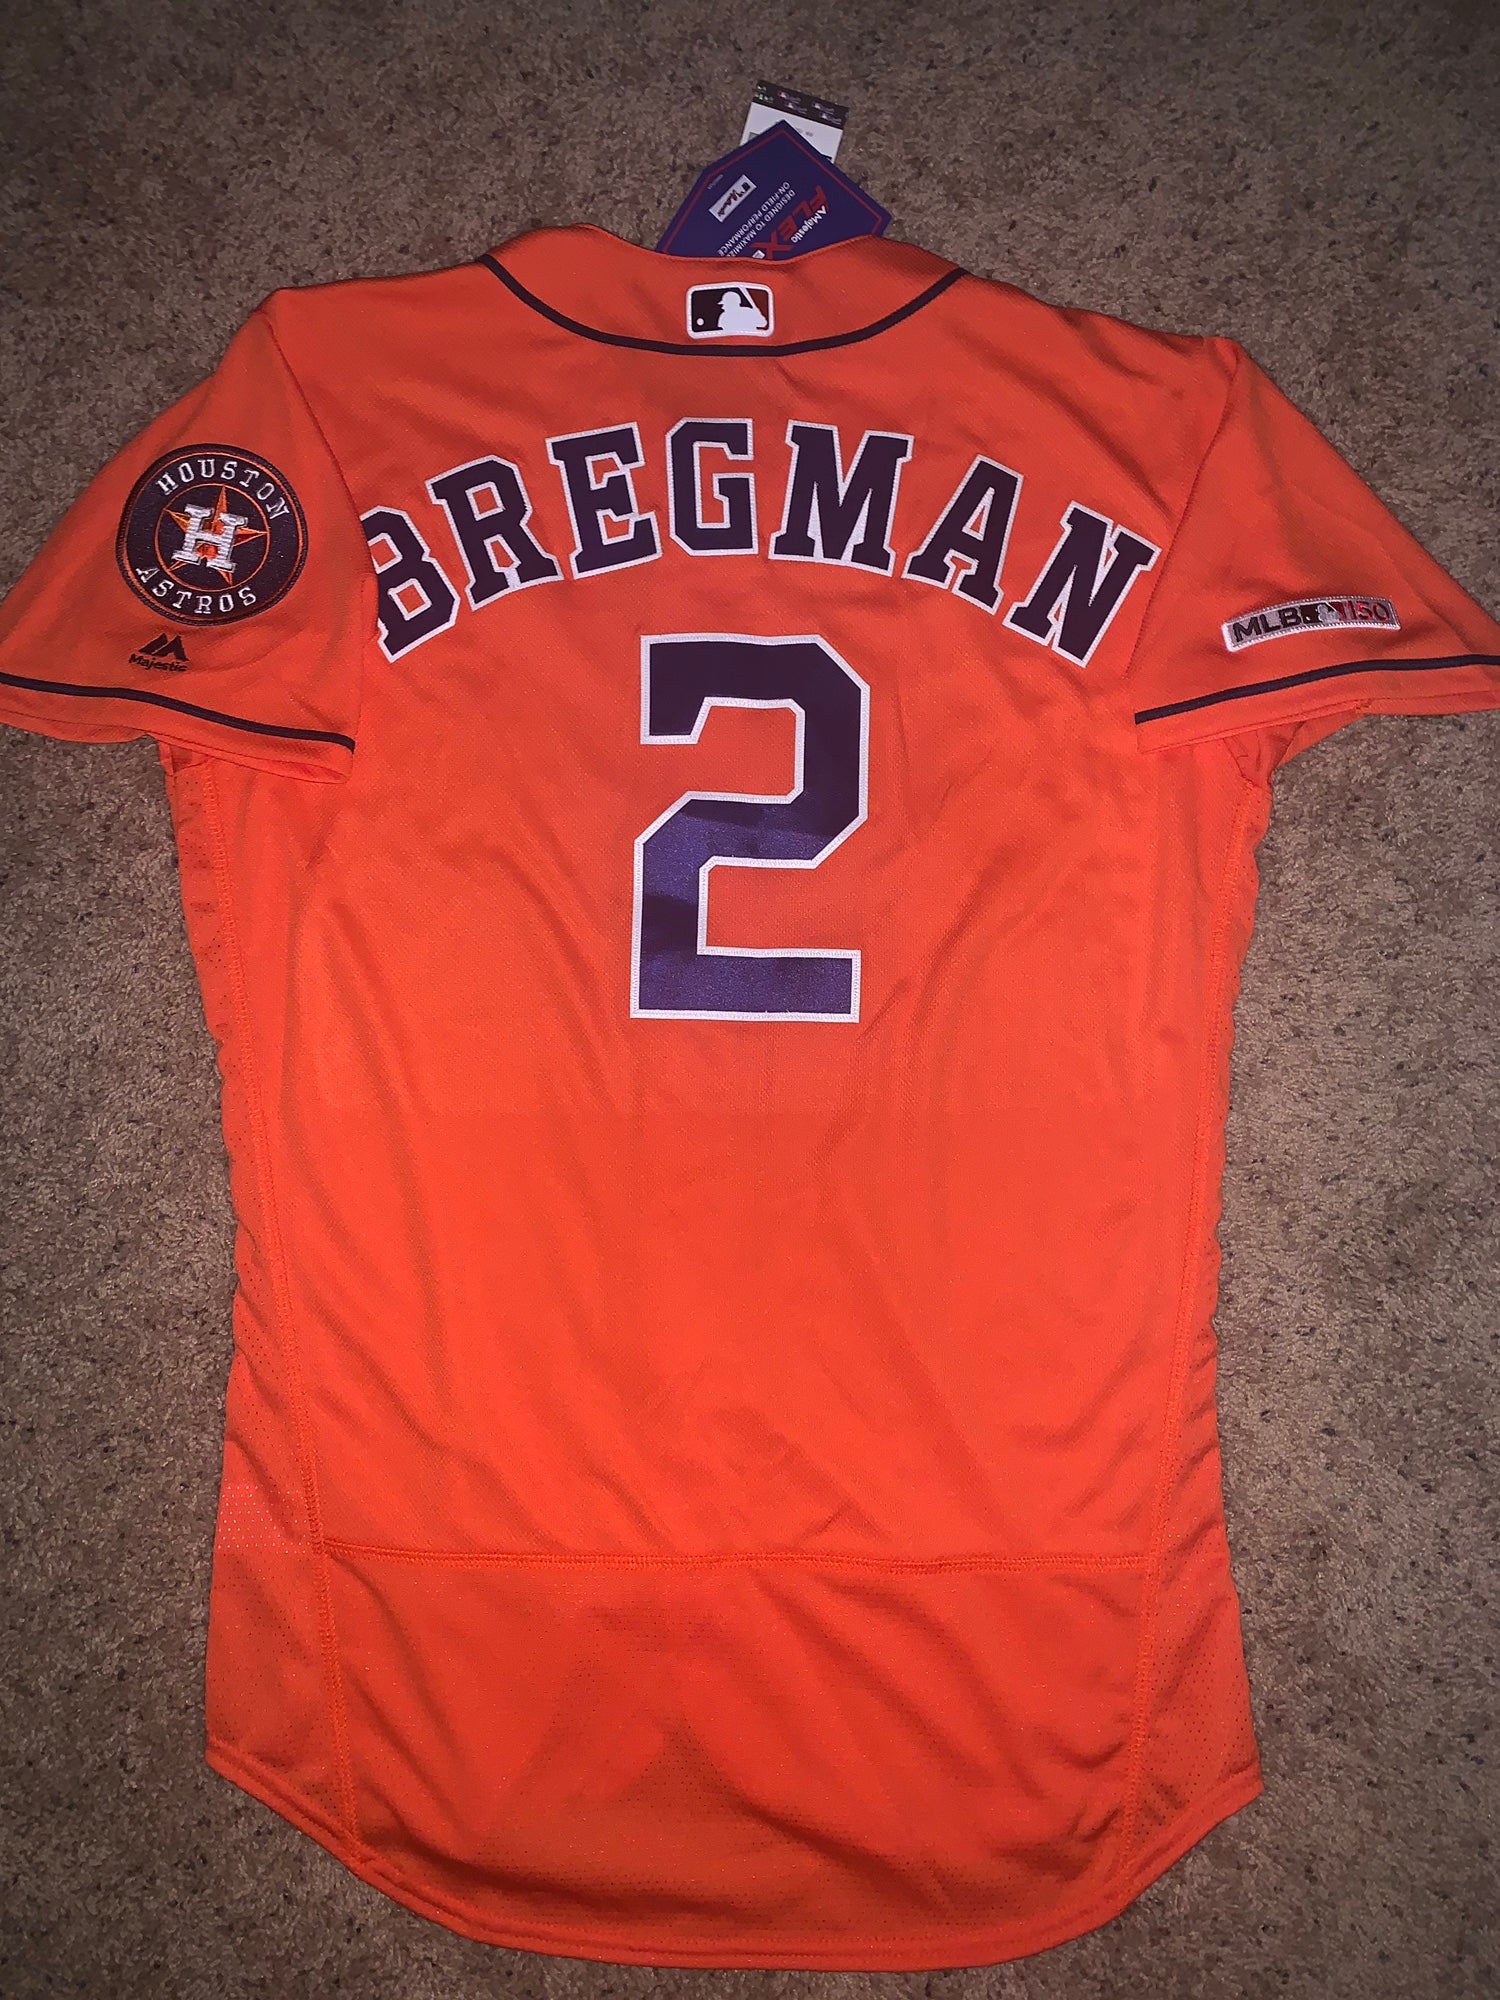 bregman orange jersey